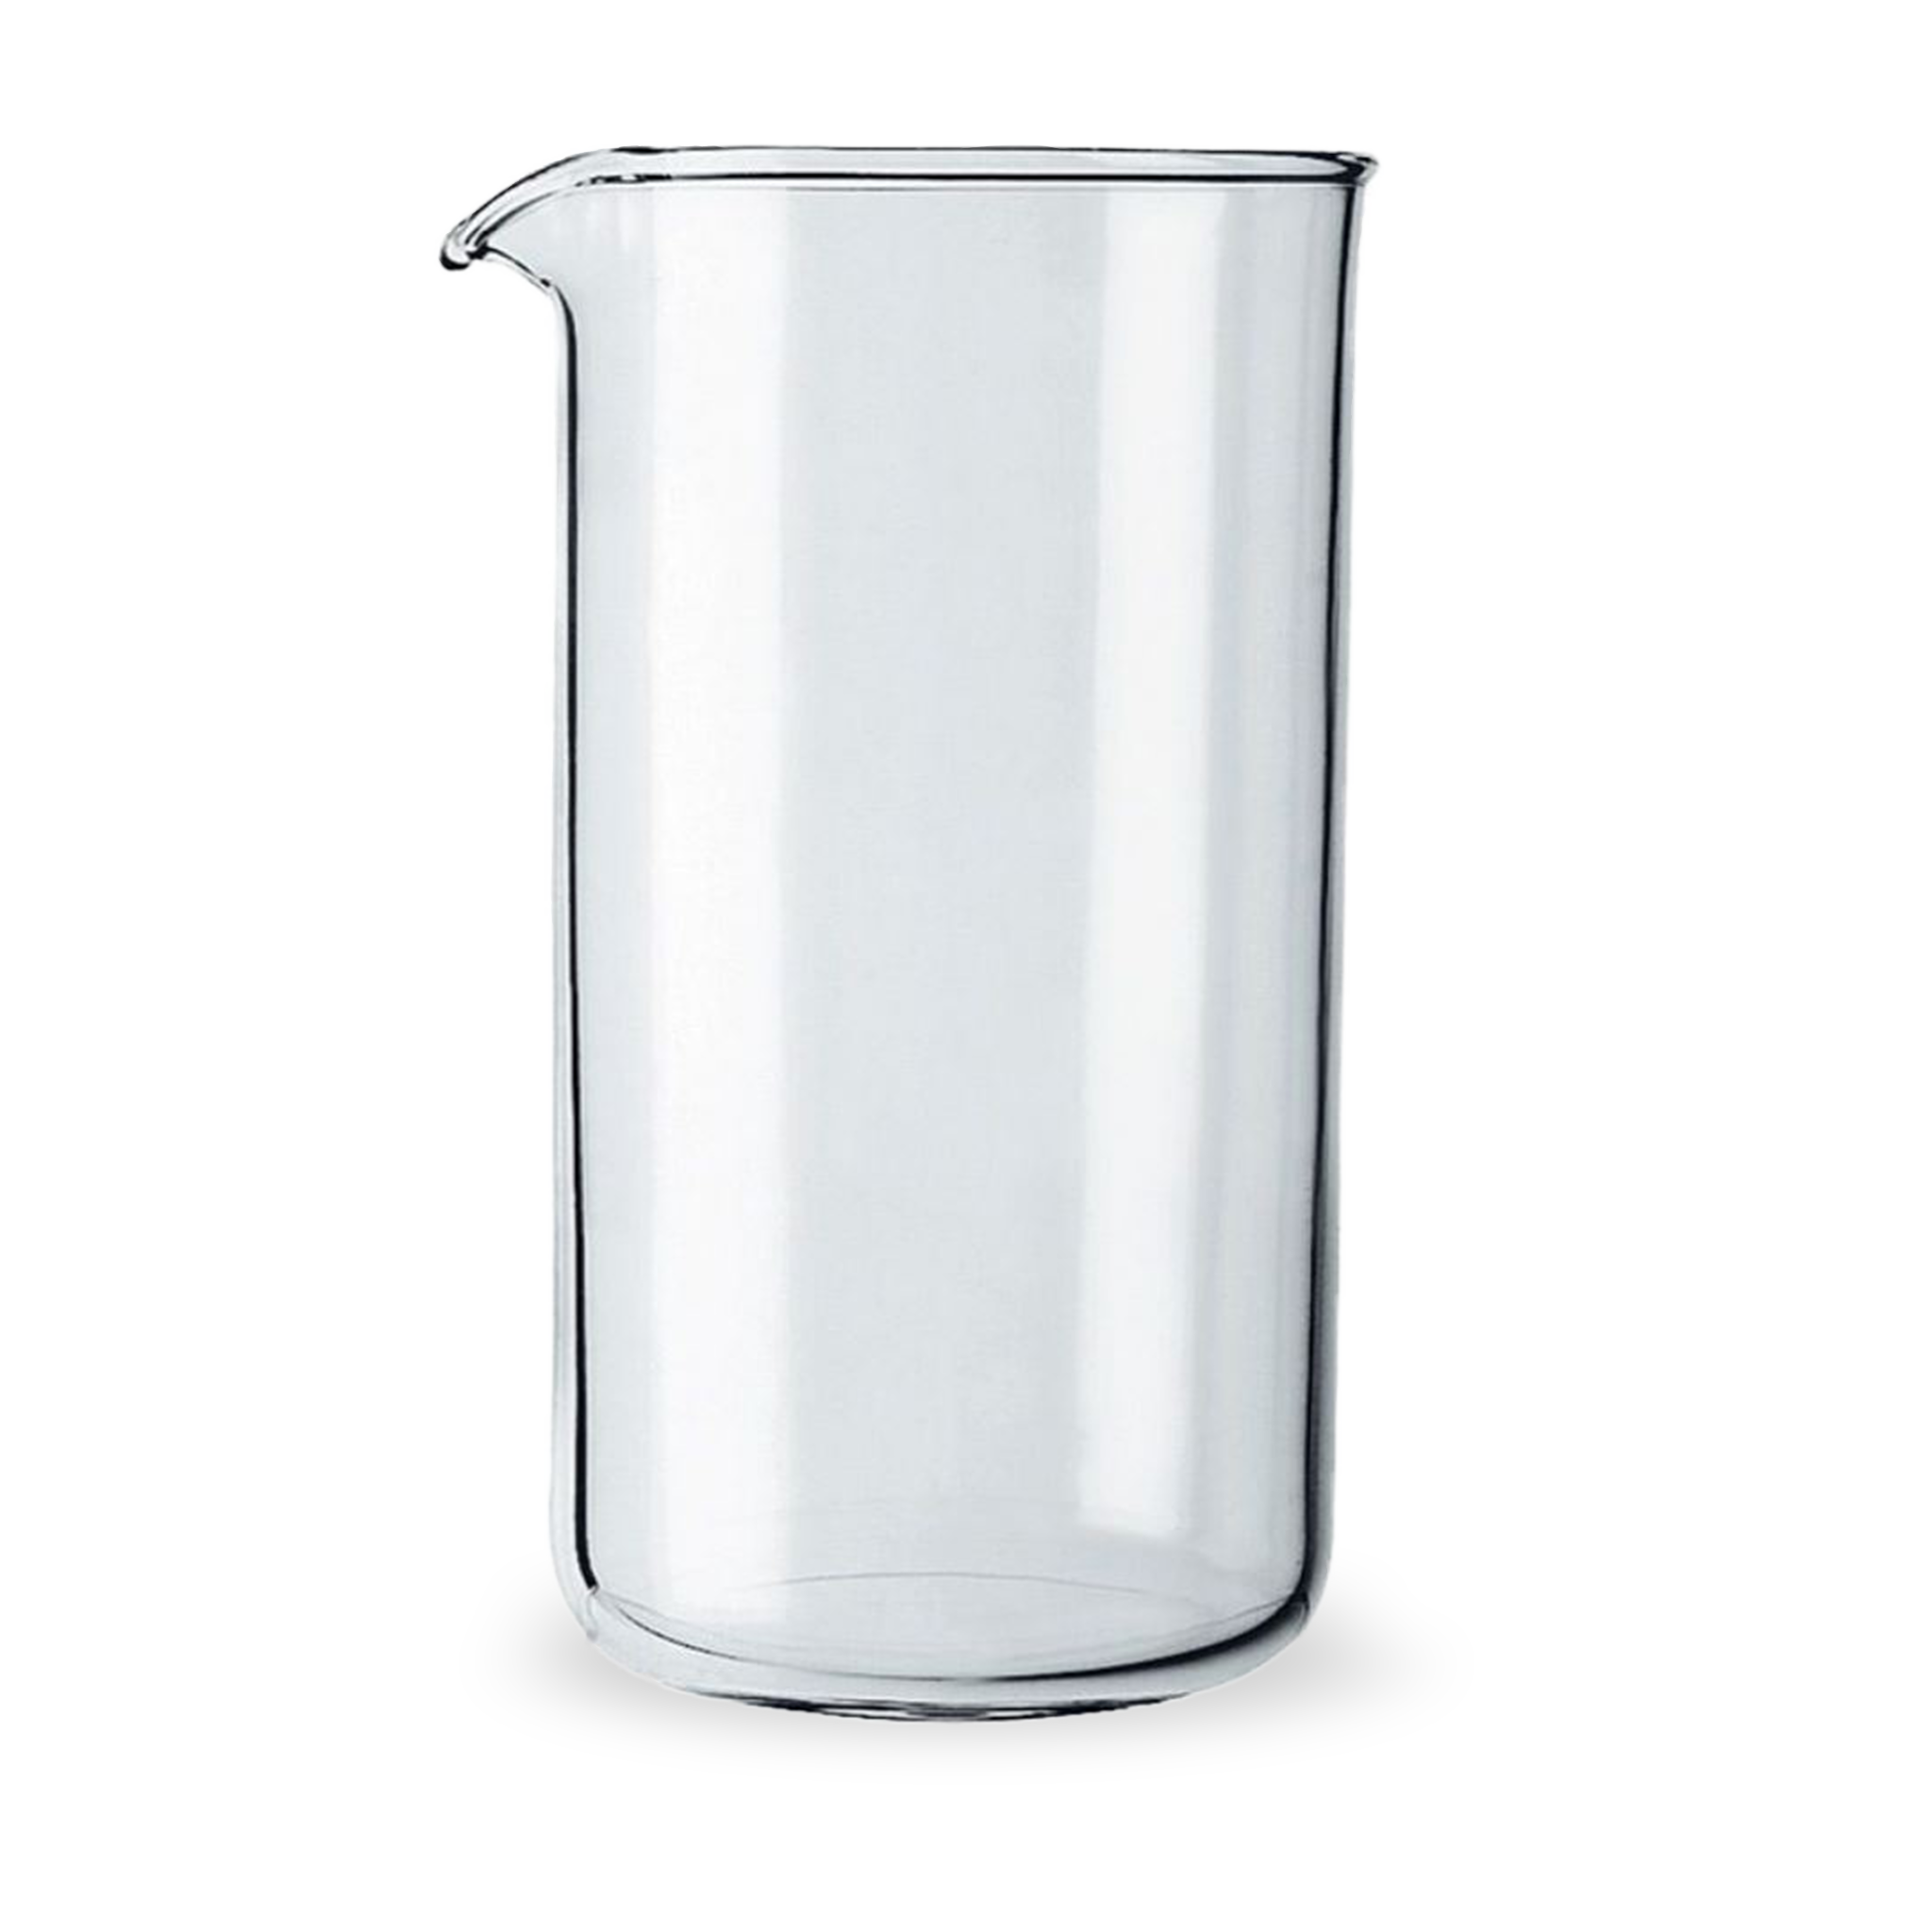 Bodum Glass Replacement Carafe